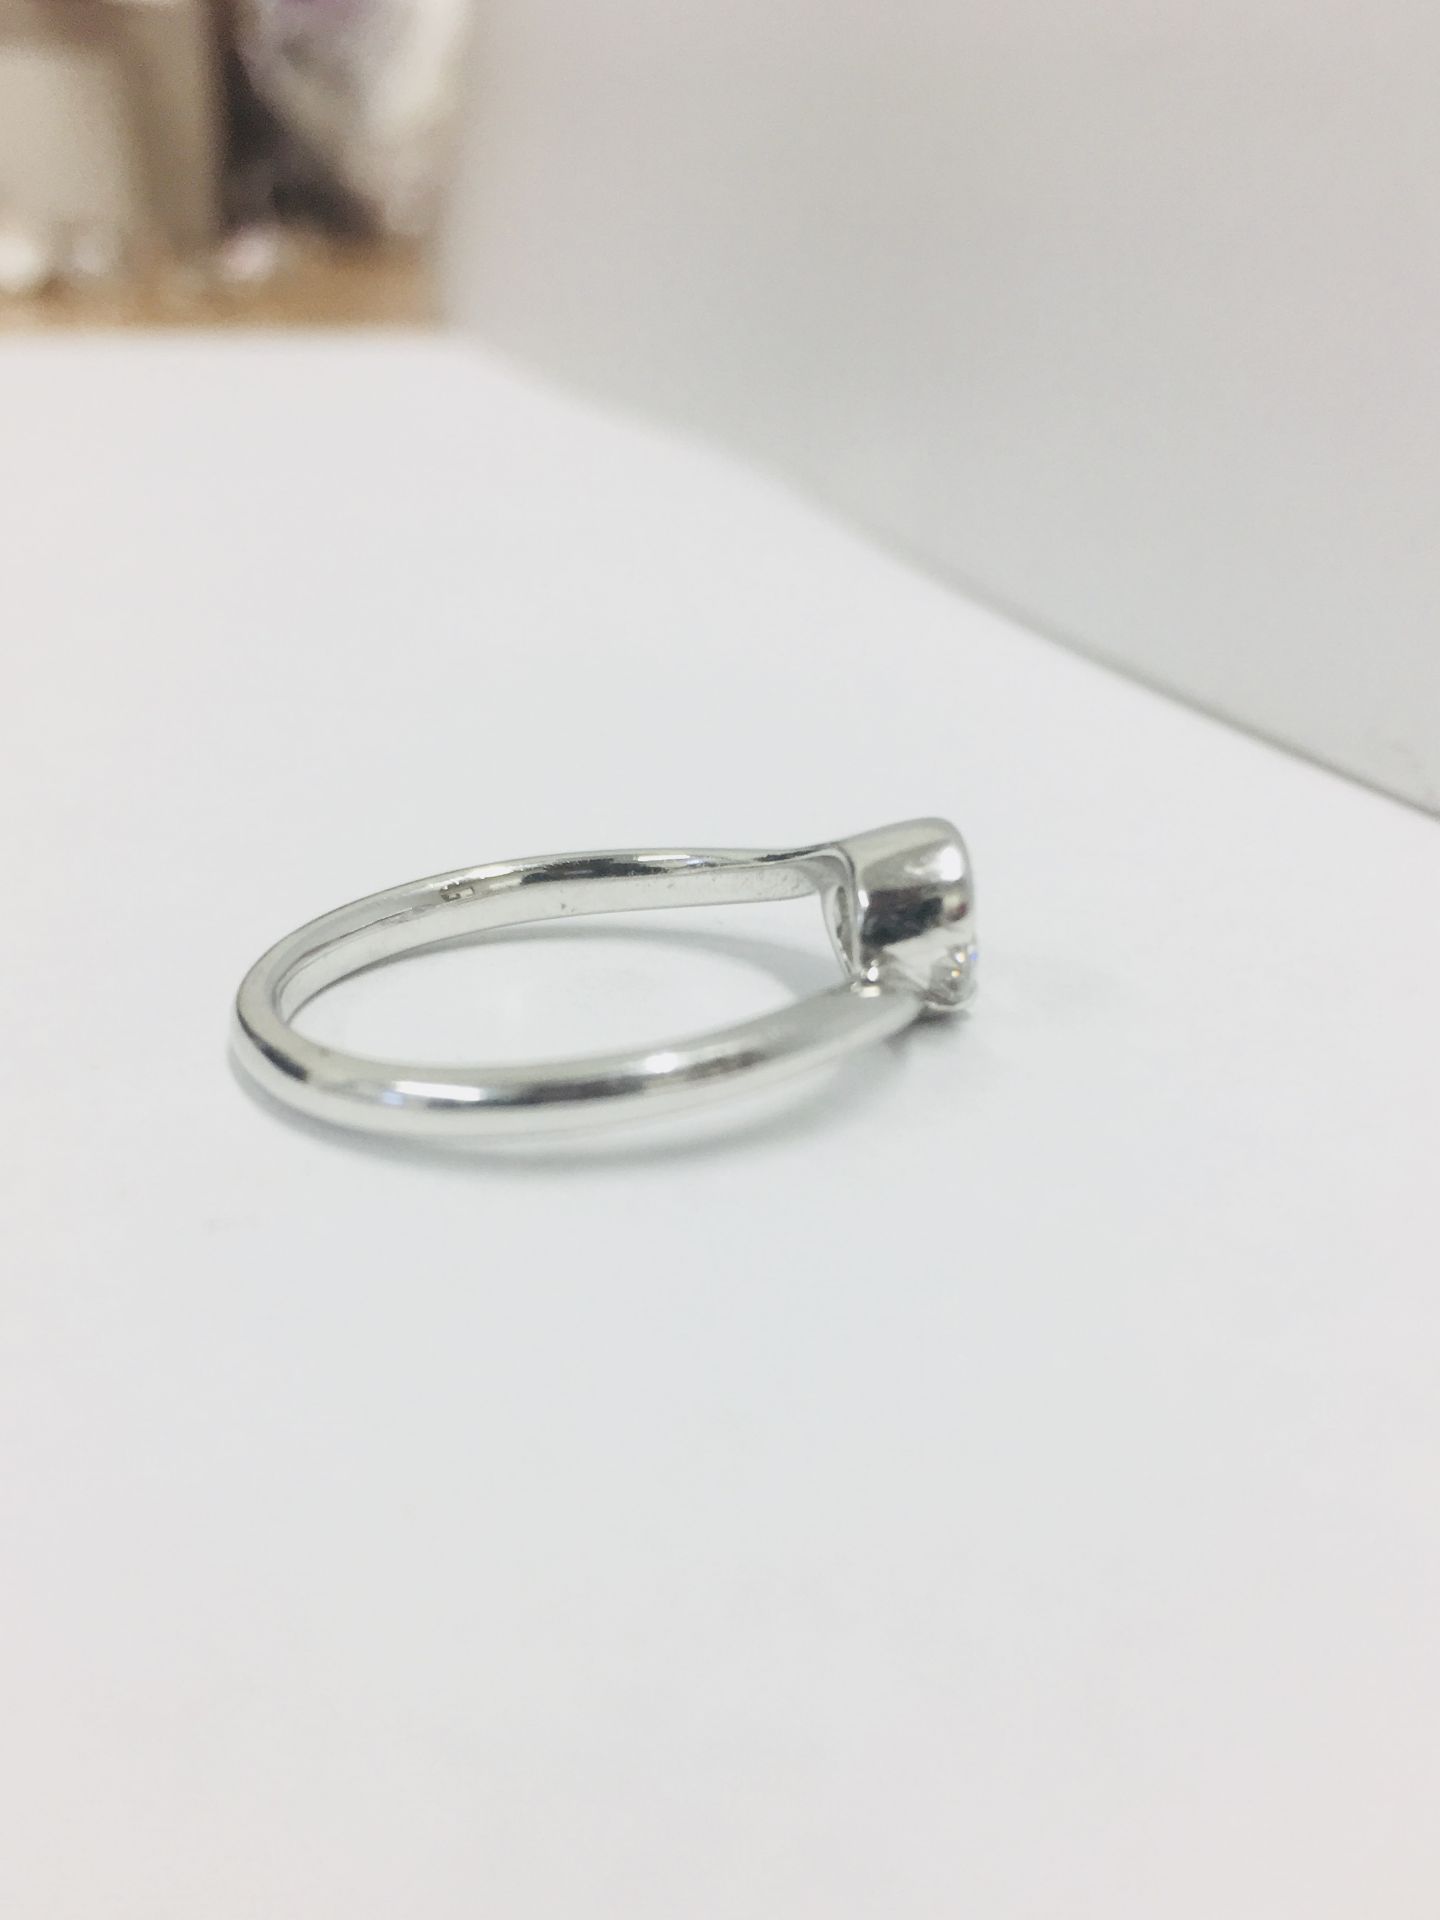 Platinum twist style diamond solitaire ring,0.50ct h colour vs clarity diamond(clarity enhanced),4. - Image 4 of 6